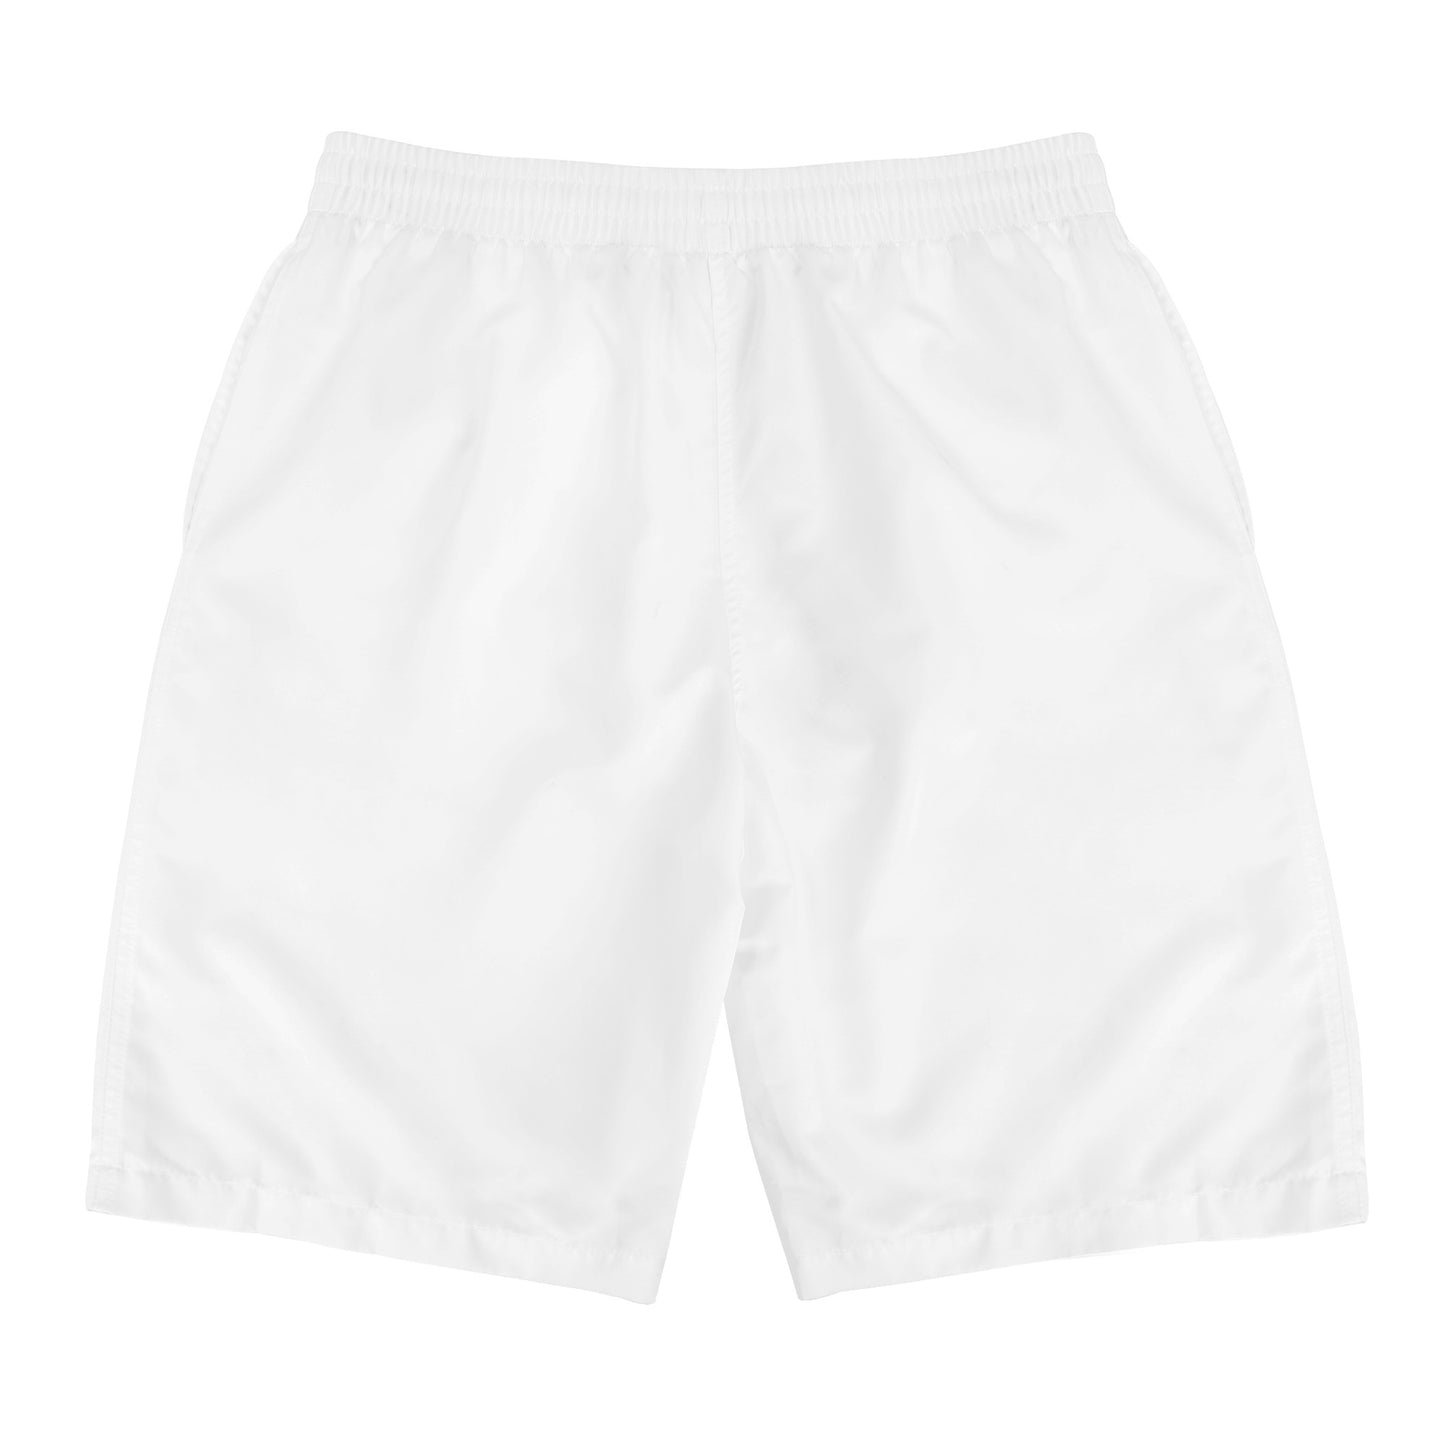 Men's All Over Print Board Shorts, White